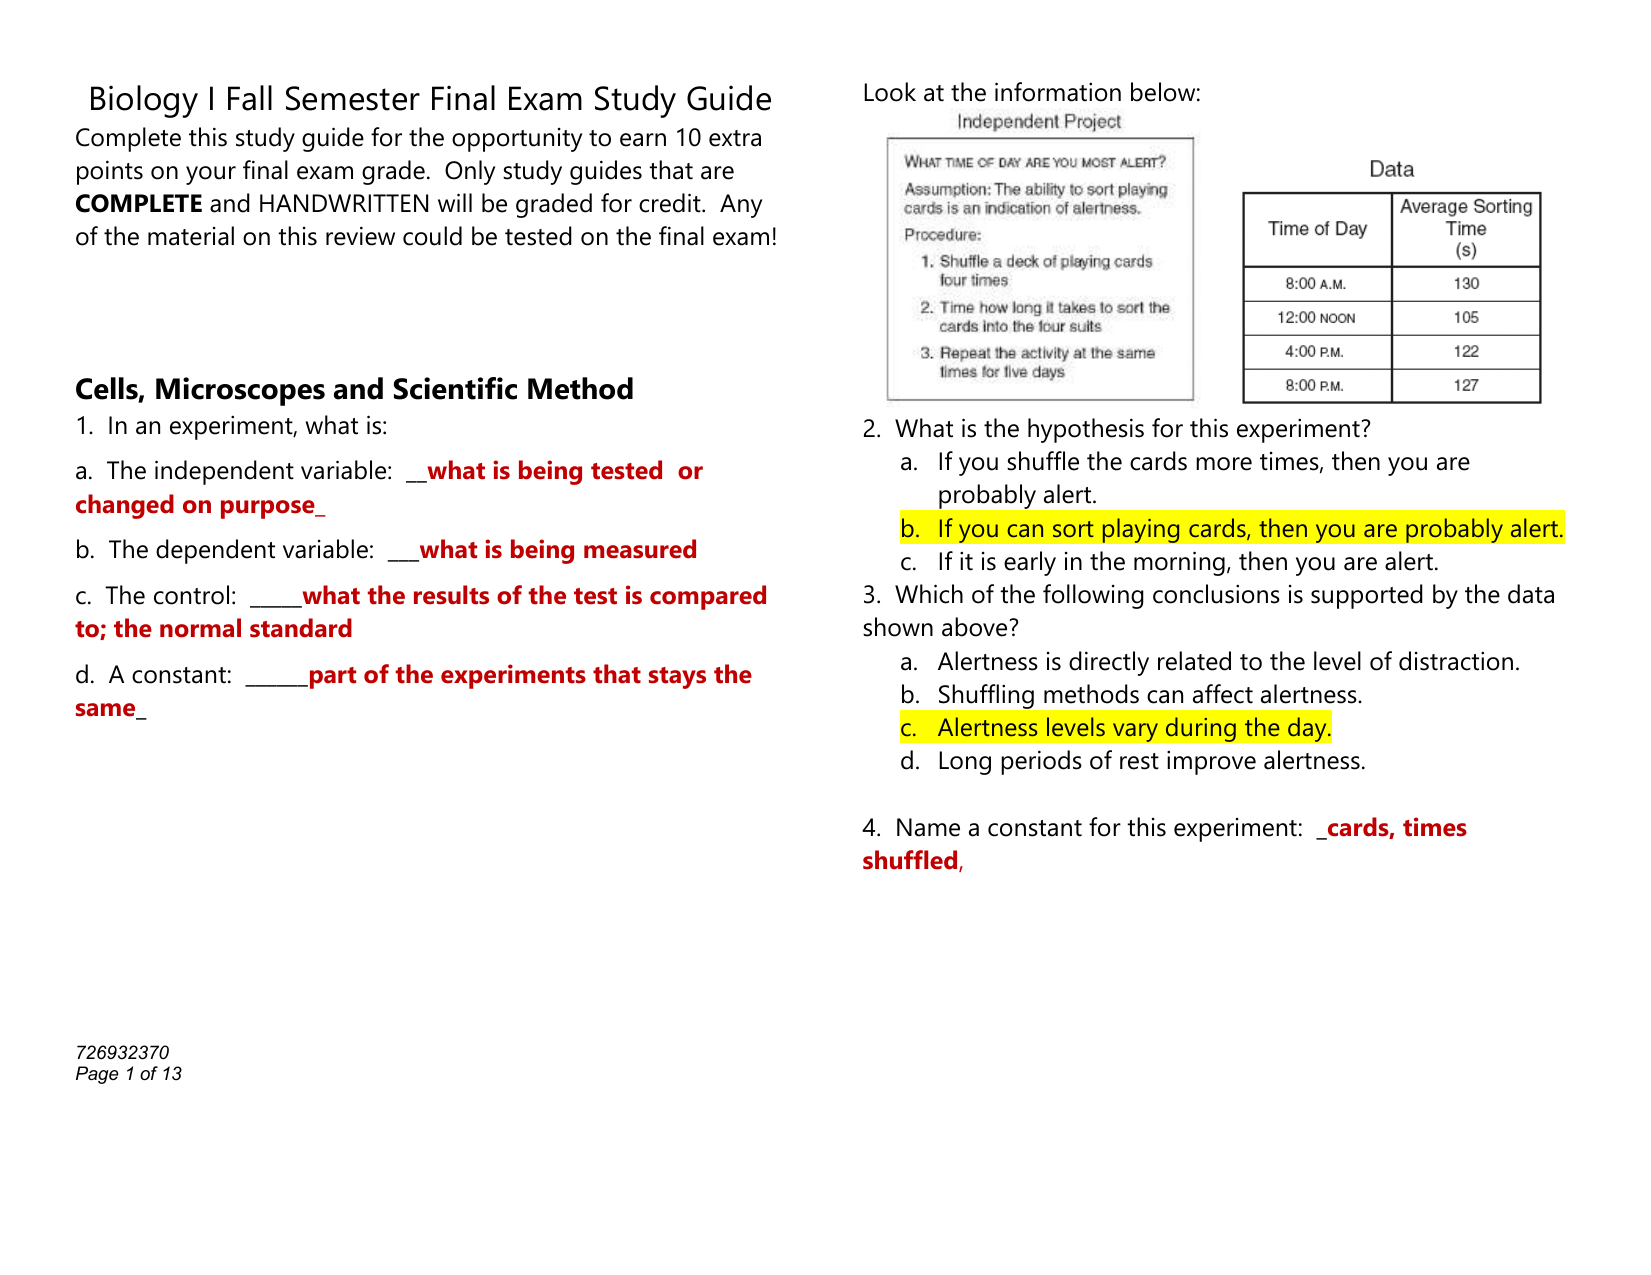 Biology Fall Semester Final Exam Study Guide Answers Study Poster